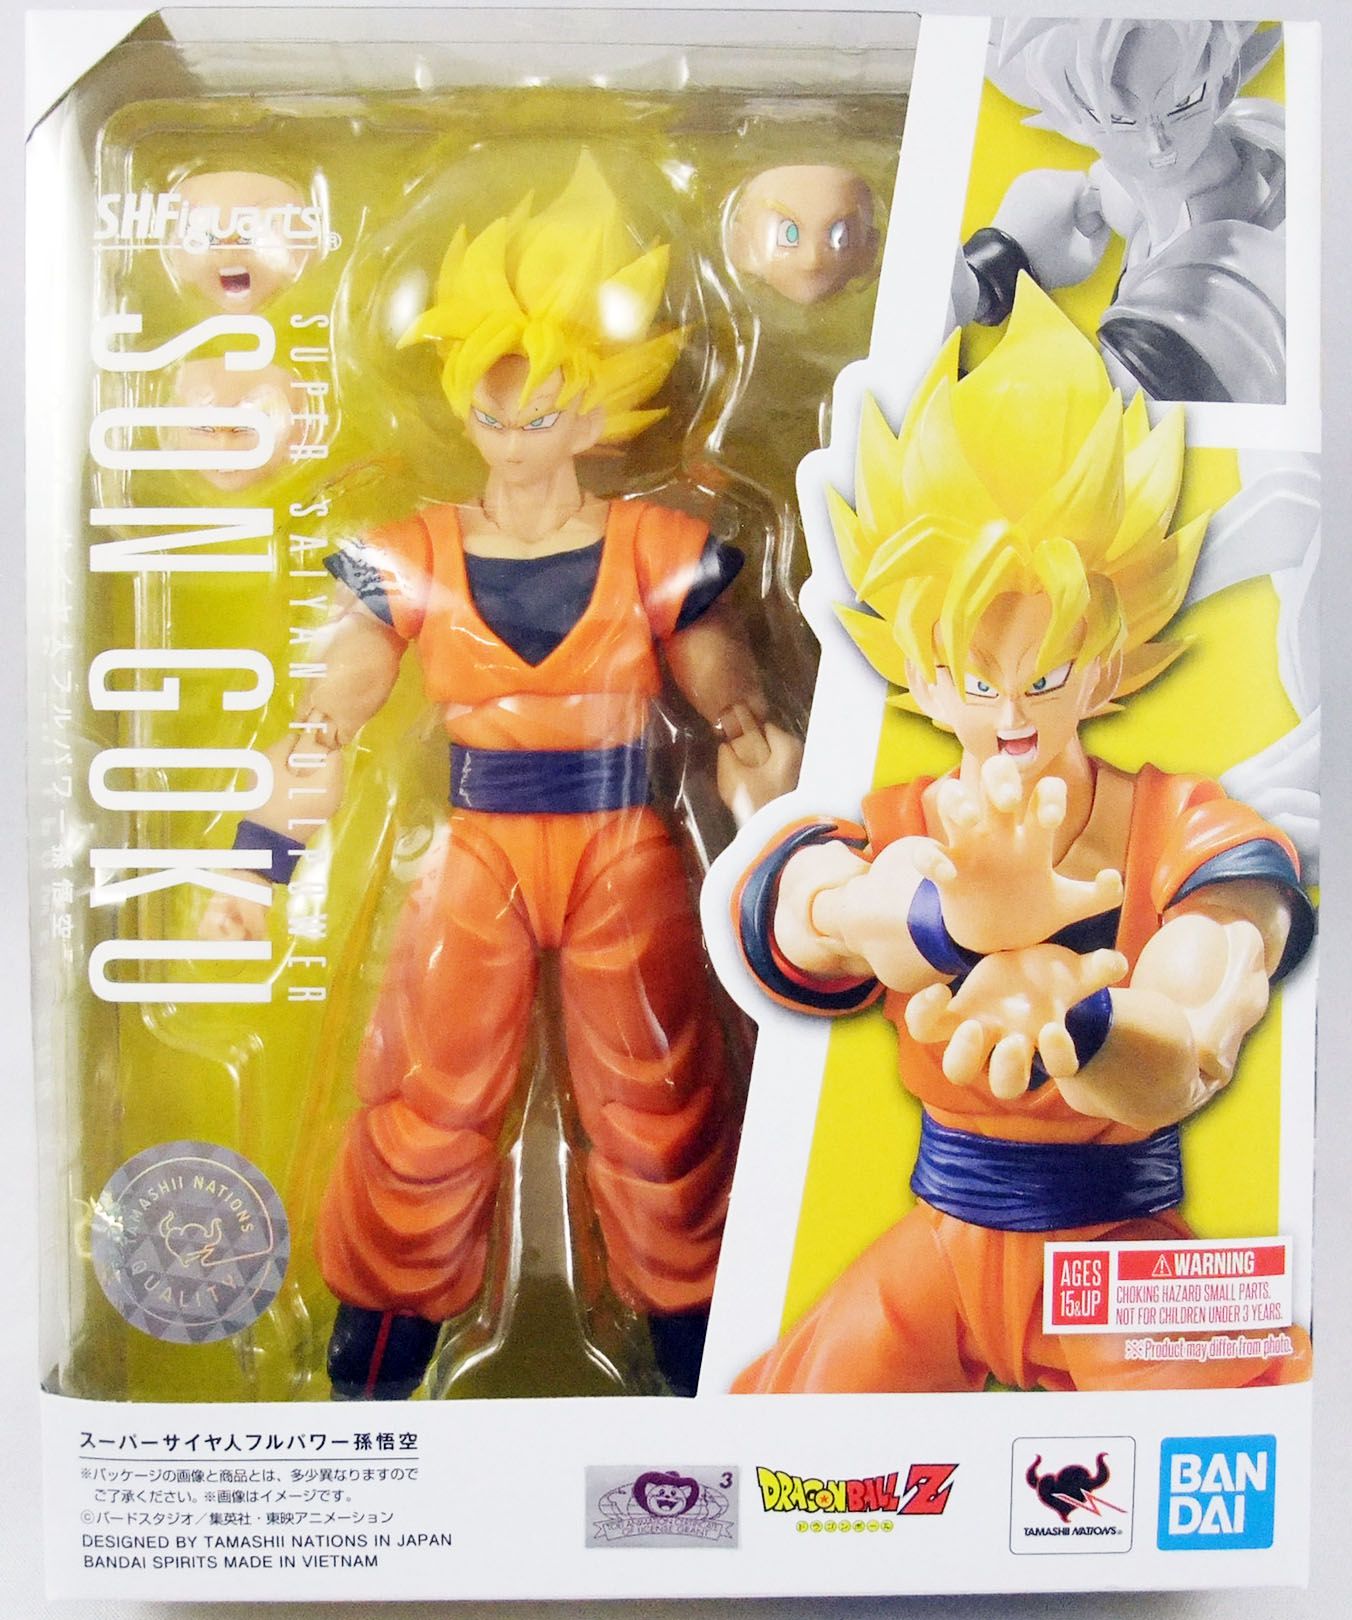 S.H.Figuarts Super Saiyan Son Goku (Full Power)